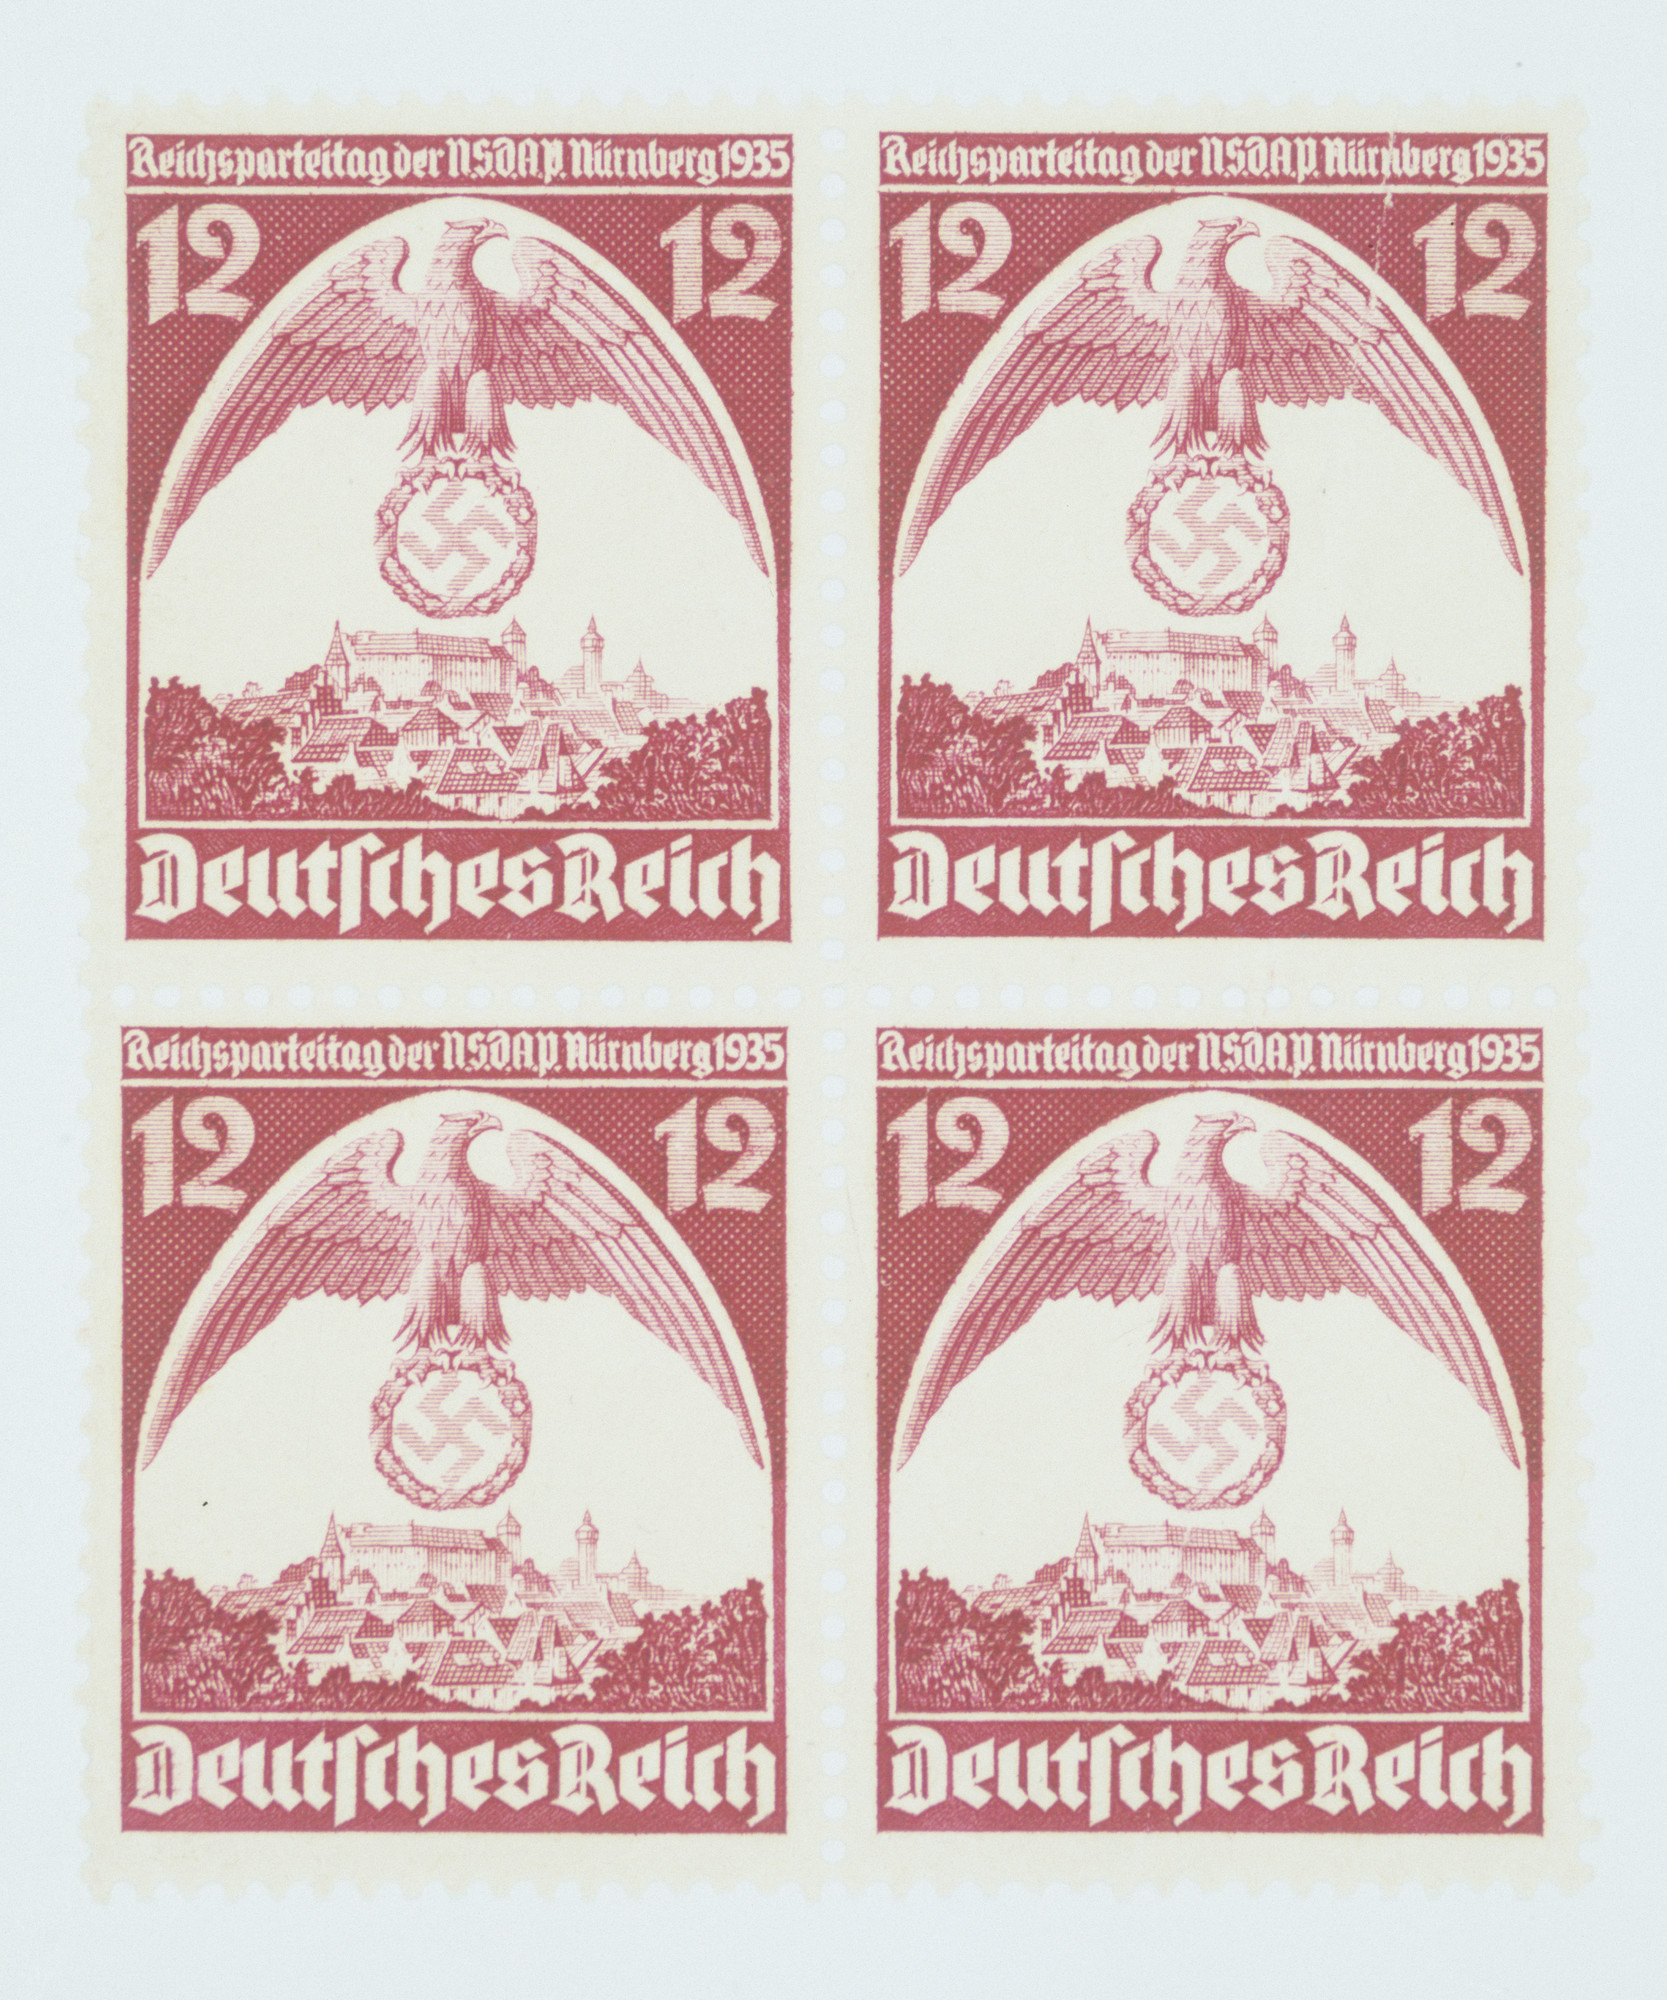 Third Reich stamps commemorating the 1935 Reichsparteitag in Nuremberg.